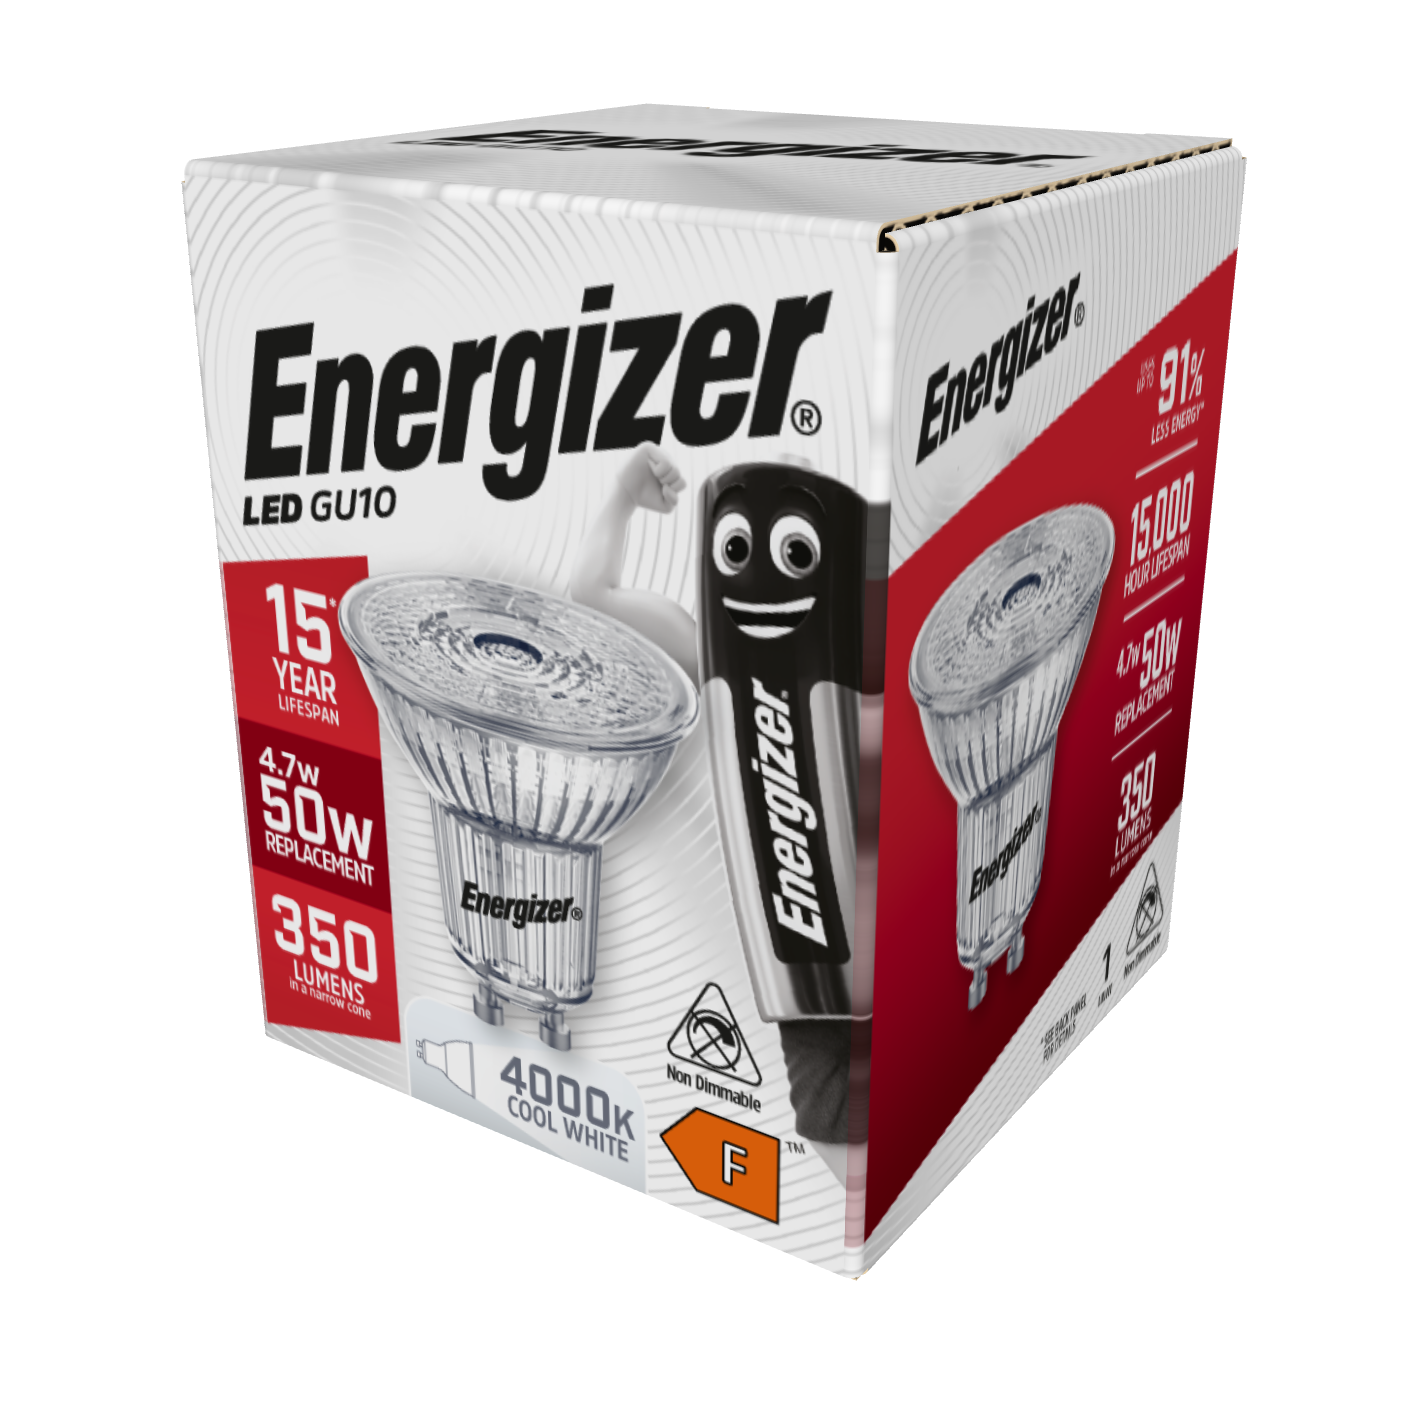 Energizer LED GU10 350 Lumens 4.7W 4,000K (Cool White), Box of 1